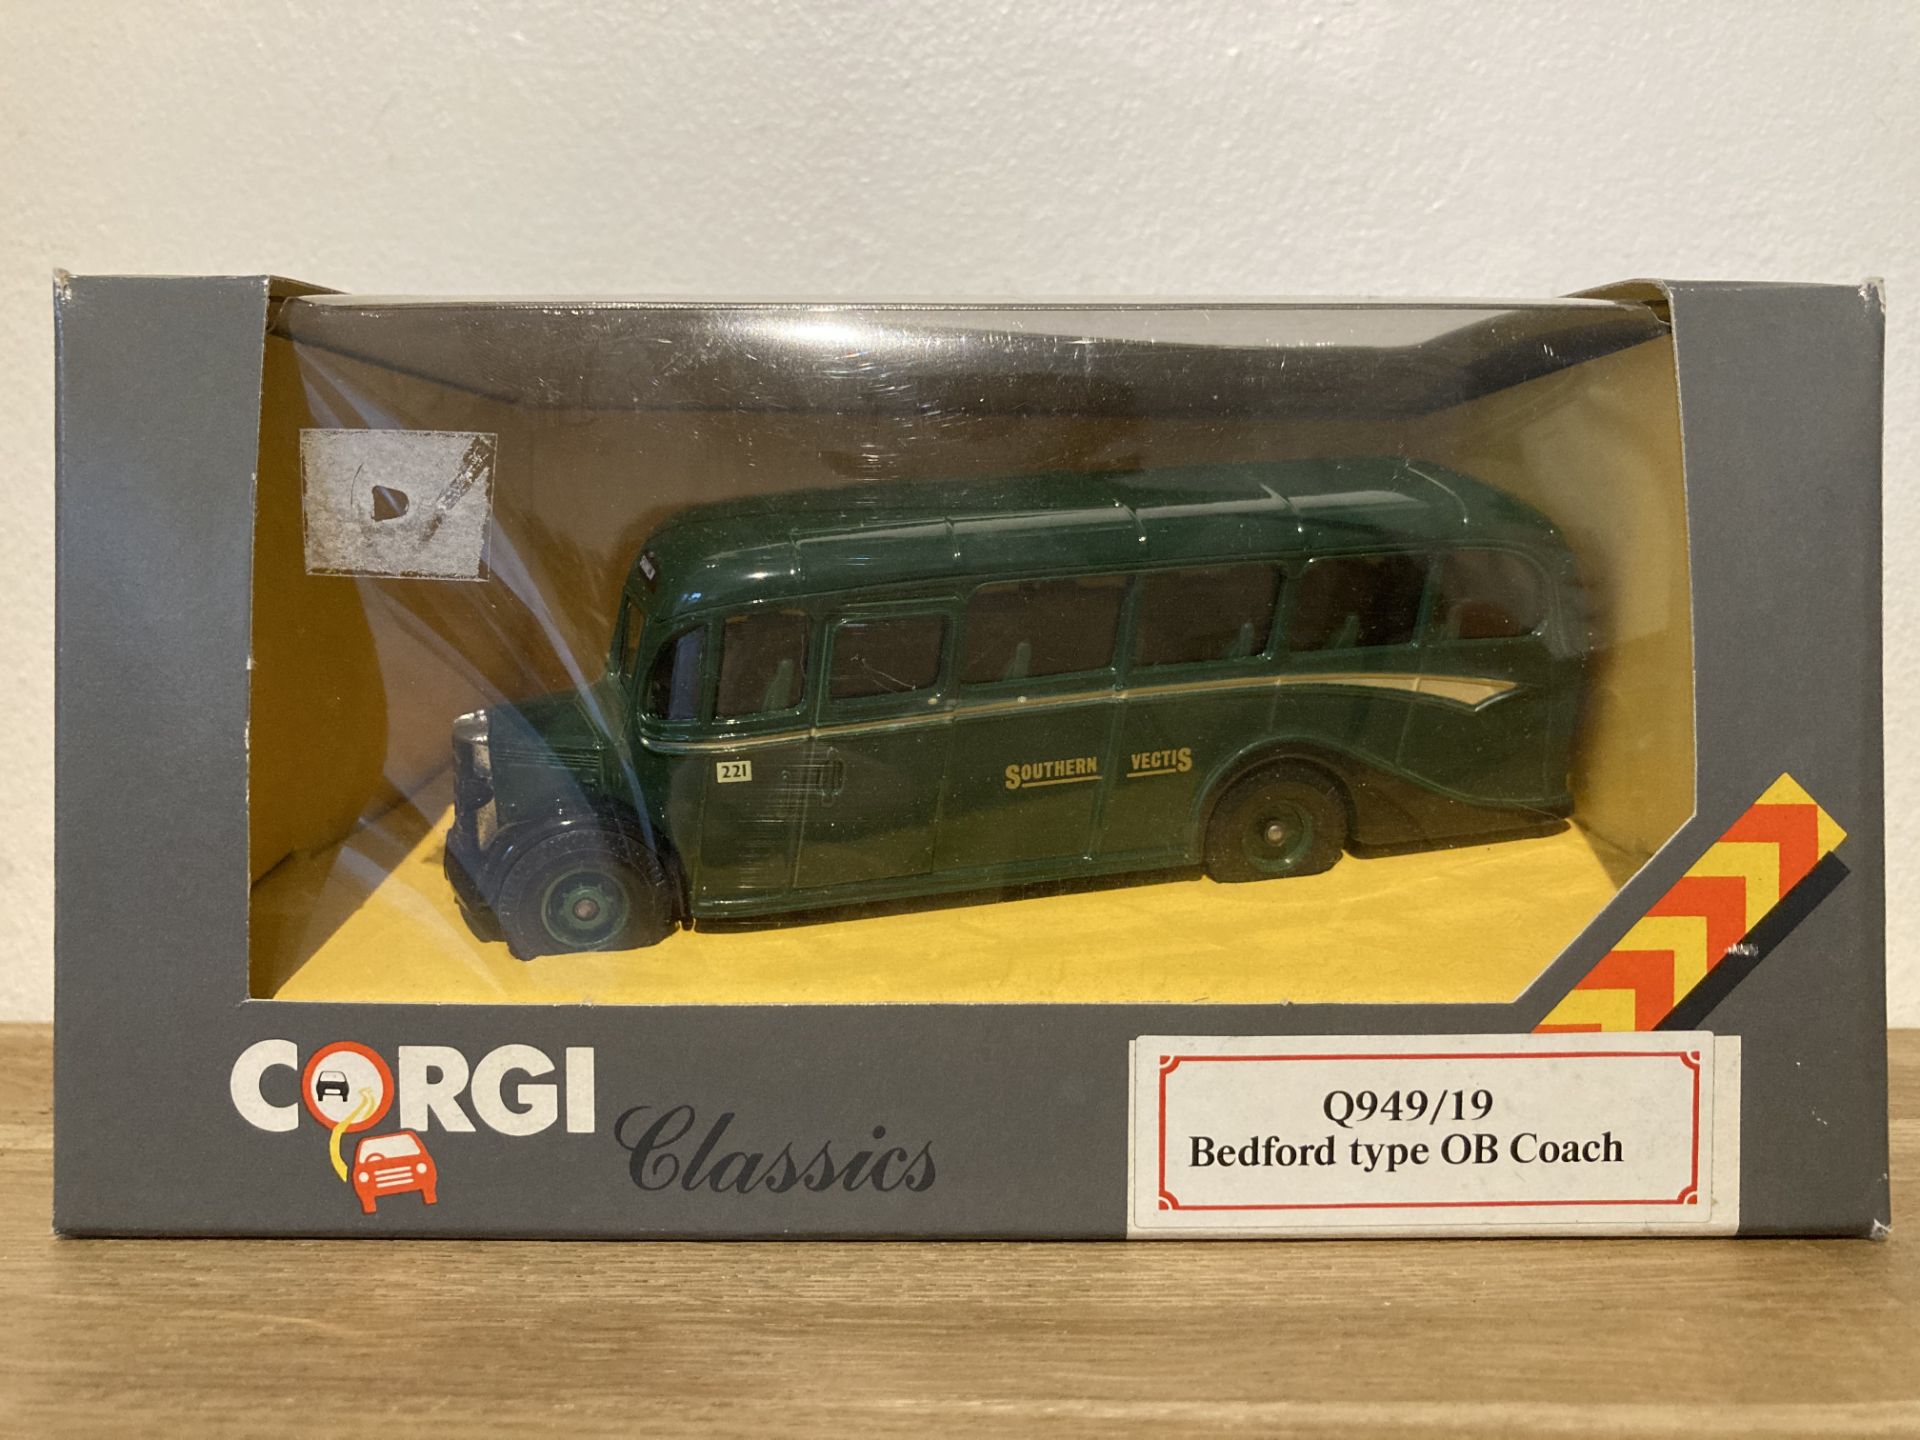 Corgi Classics Southern Vectis - Q949/19 Bedford Type OB Coach